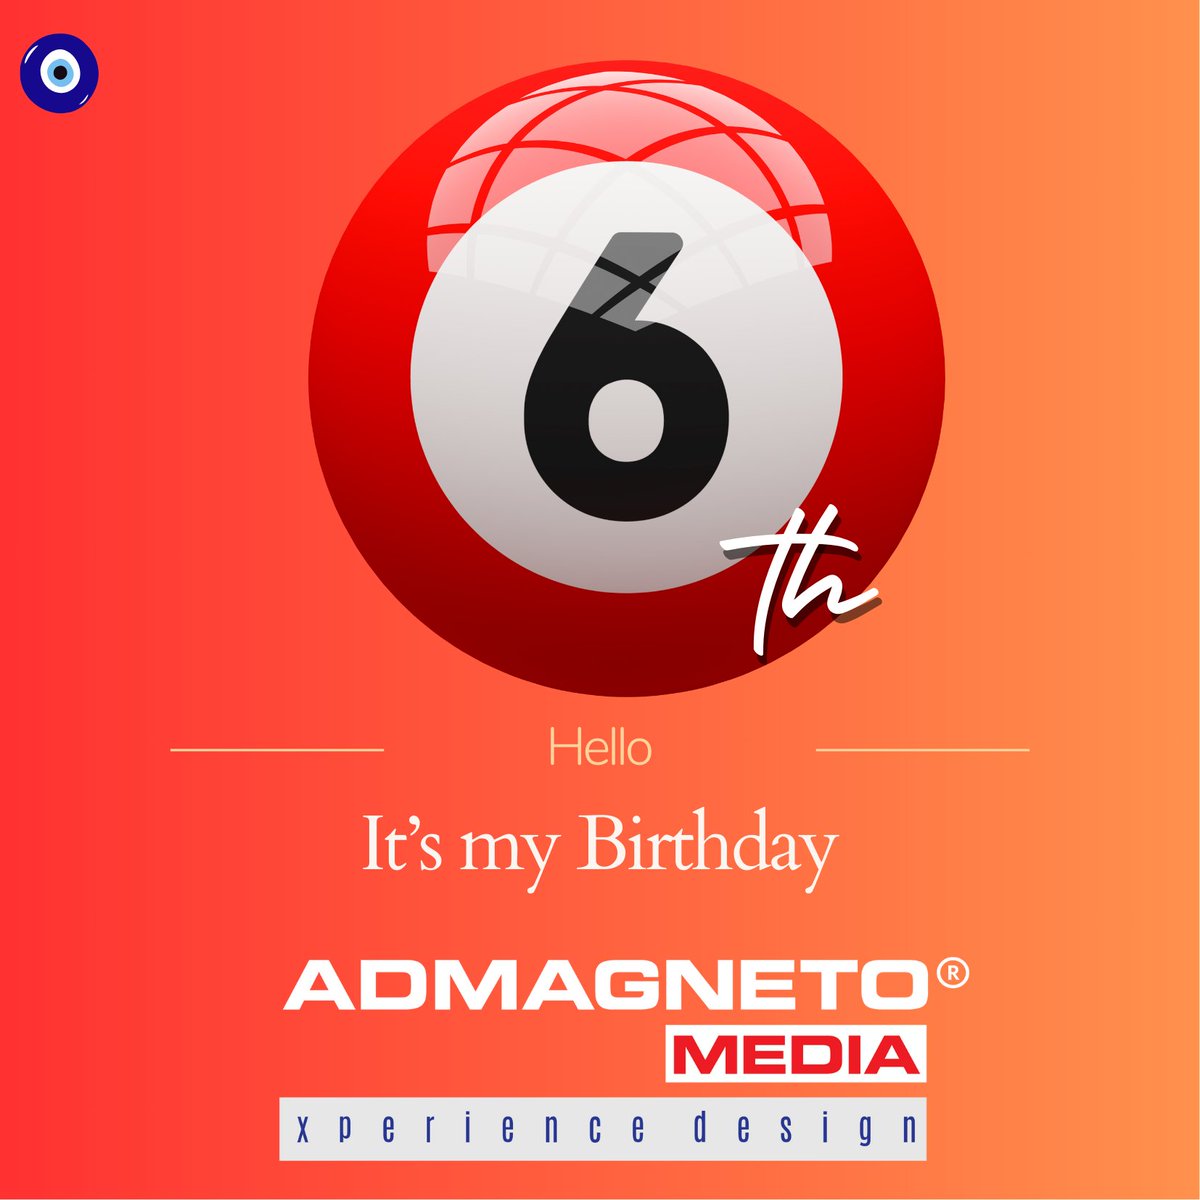 📷Cheers to the past, present, and future of AdMagneto Media!
Check  admagneto.com/top-social-med…
#AdMagnetoMedia #AnniversaryCelebration #MilestoneMoments #TeamSpirit #Gratitude #EntrepreneurialJourney